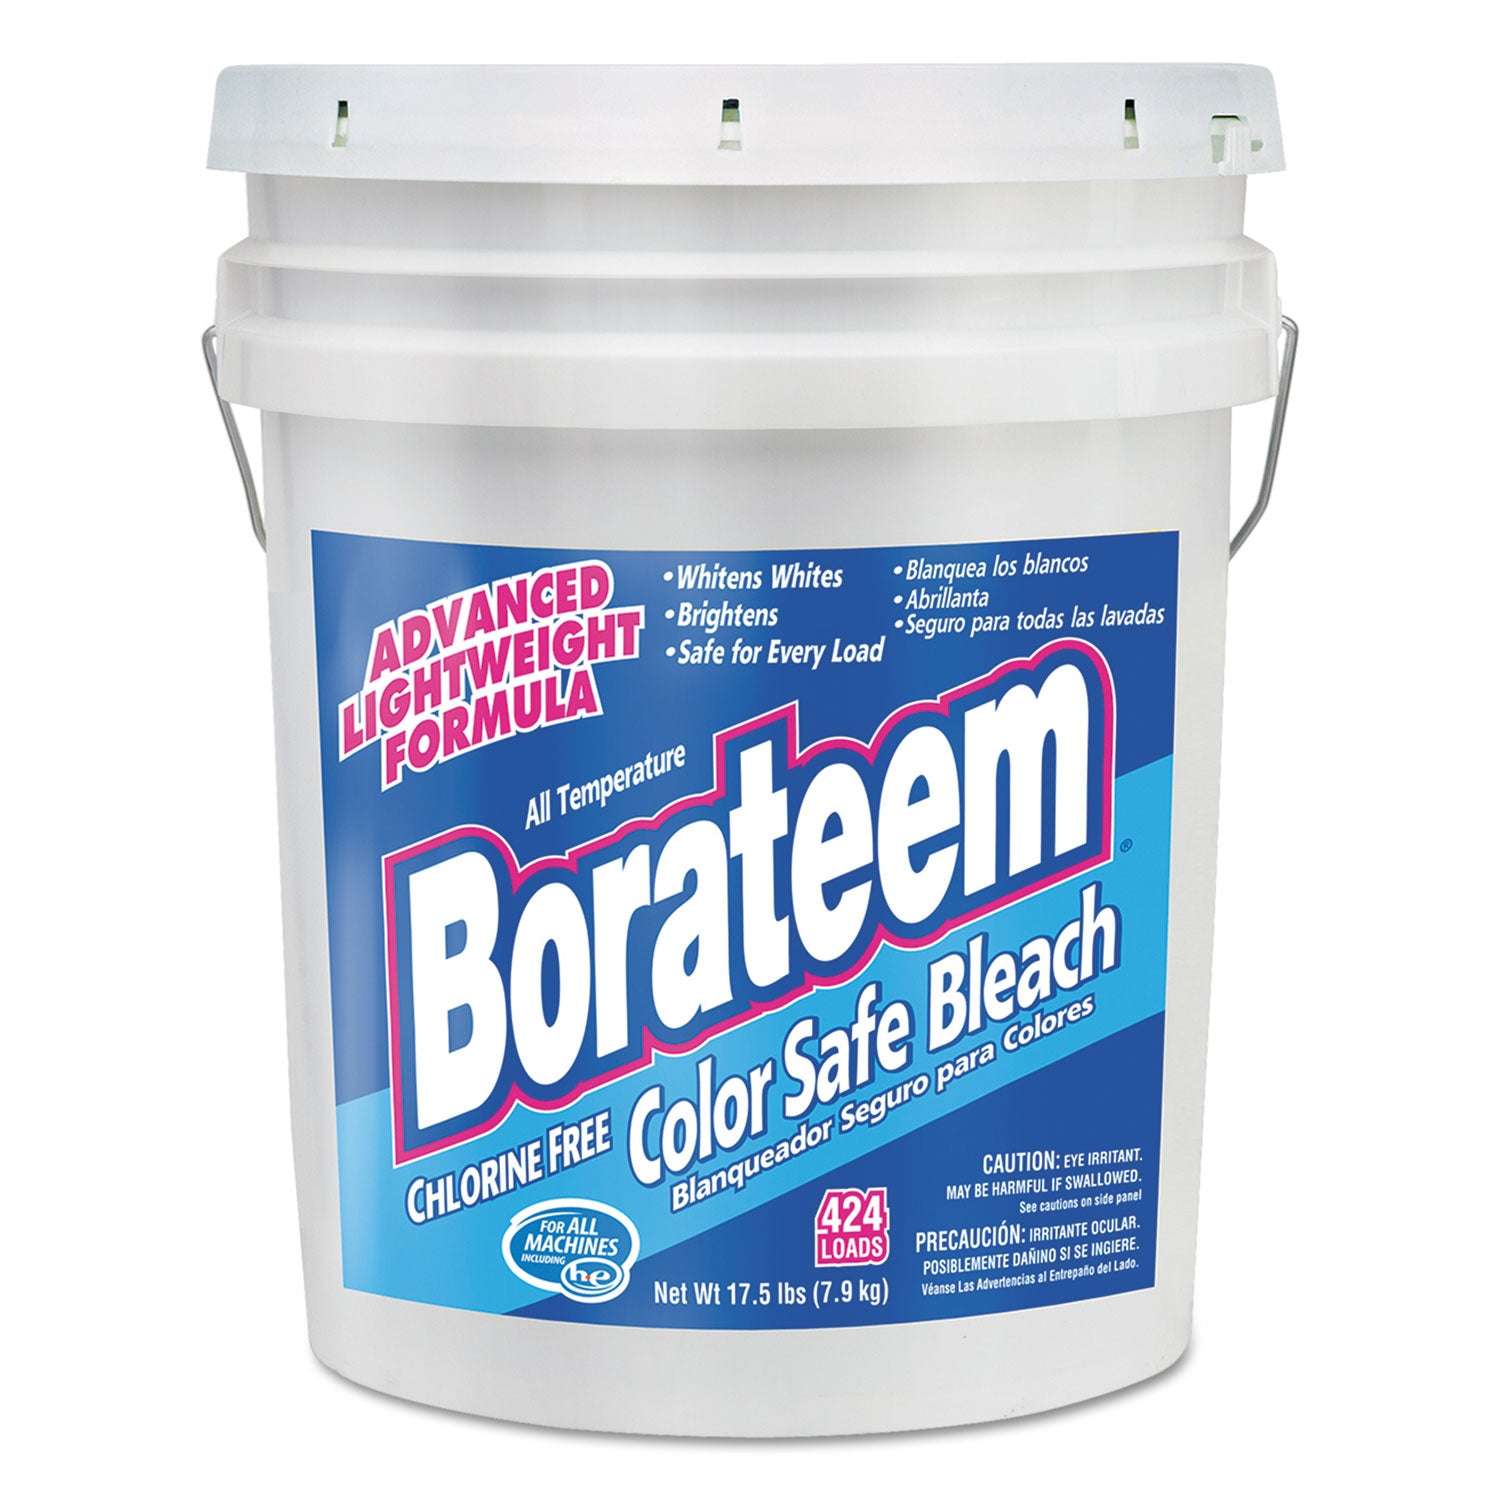 Chlorine-Free Color Safe Bleach, Powder, 17.5 lb. Pail - 